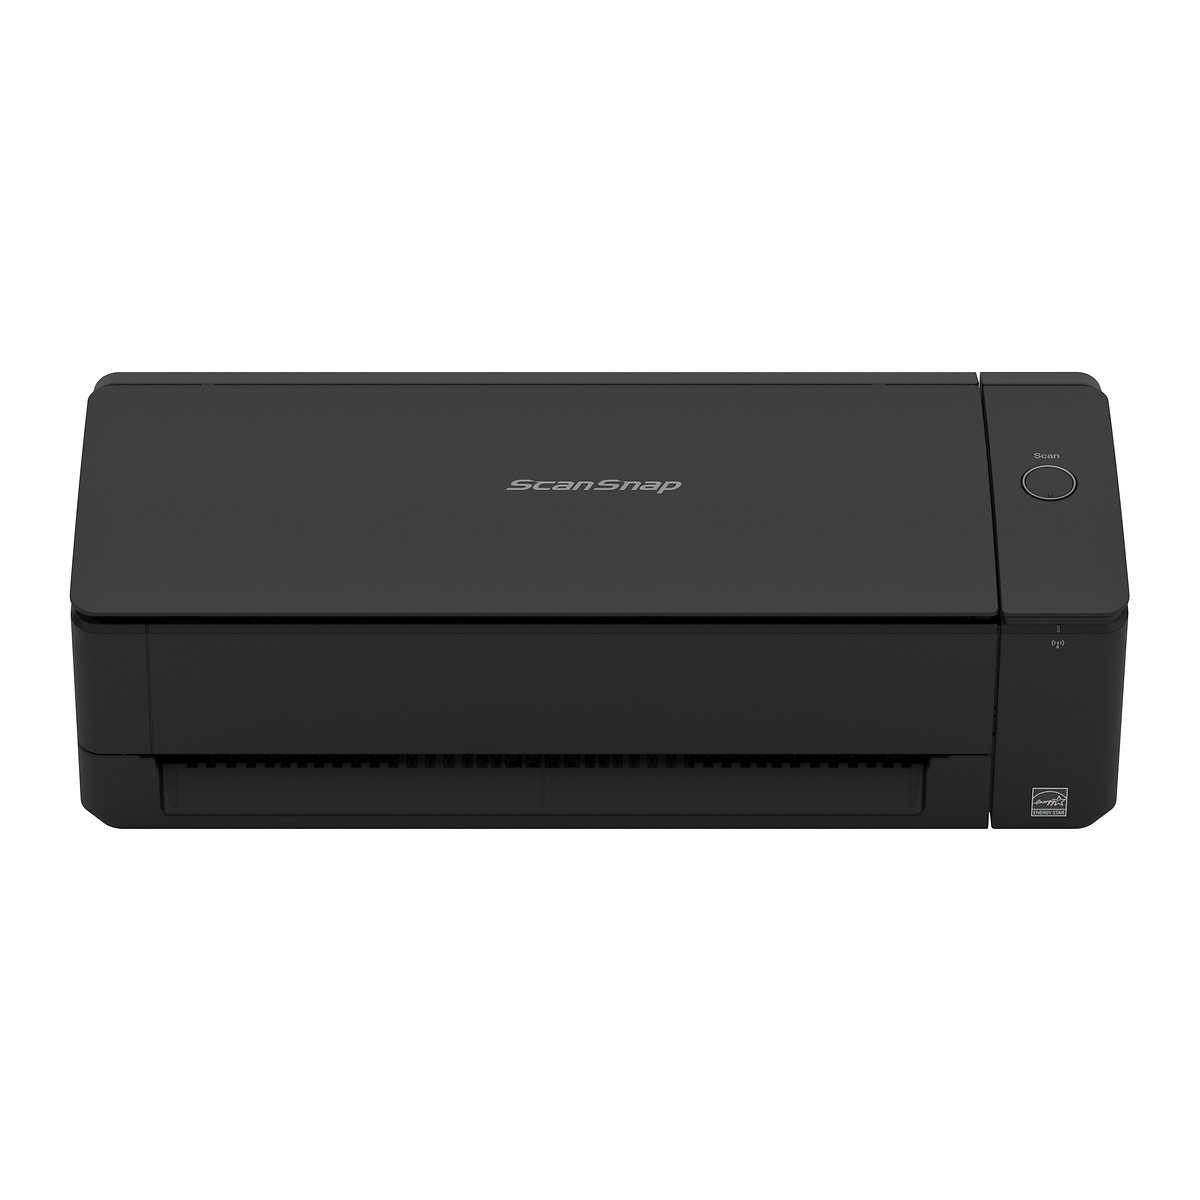 Fujitsu ScanSnap IX1300 Scanner | Costco